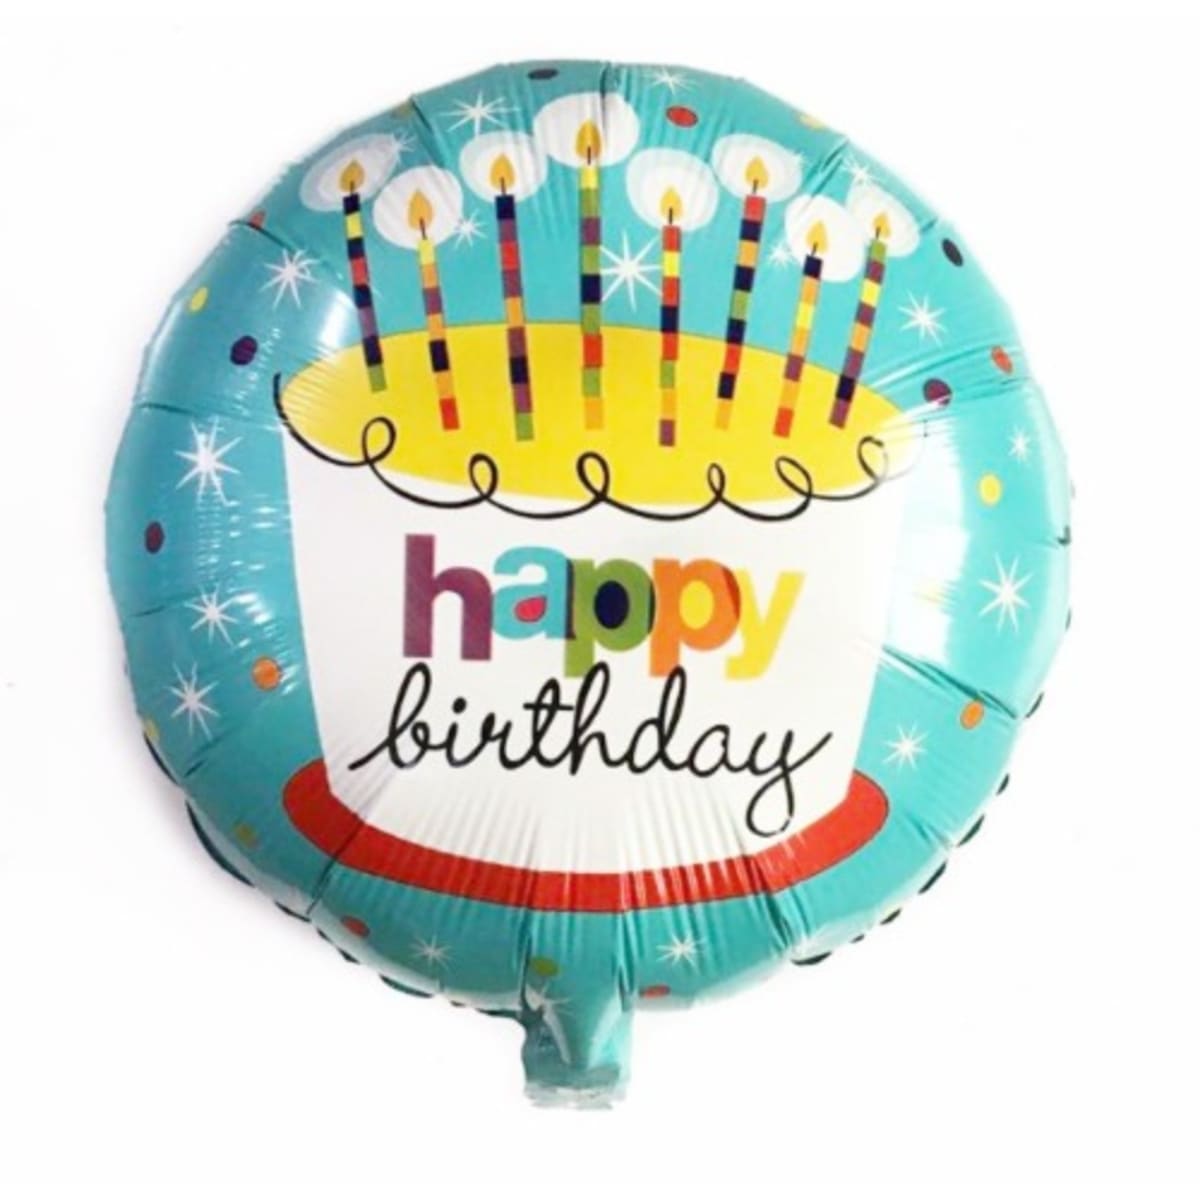 Happy Cake Day Birthday Foil Balloon